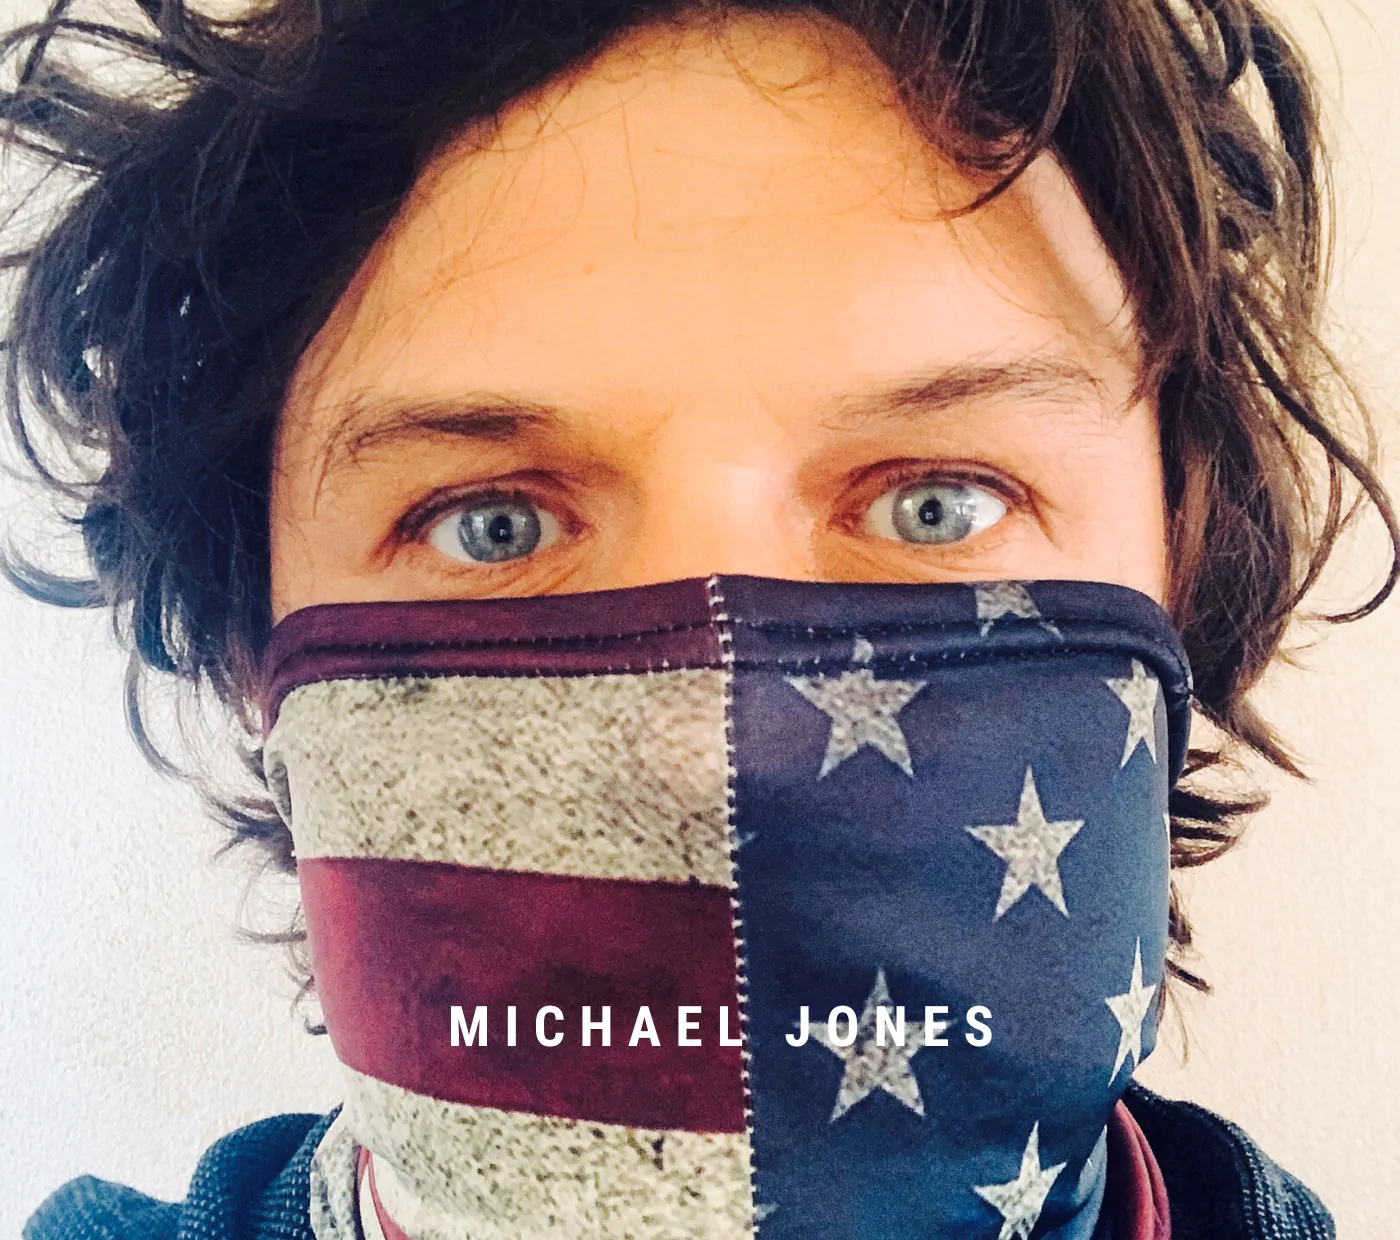 TRACK PREMIERE: Michael Jones – We Are Soldiers